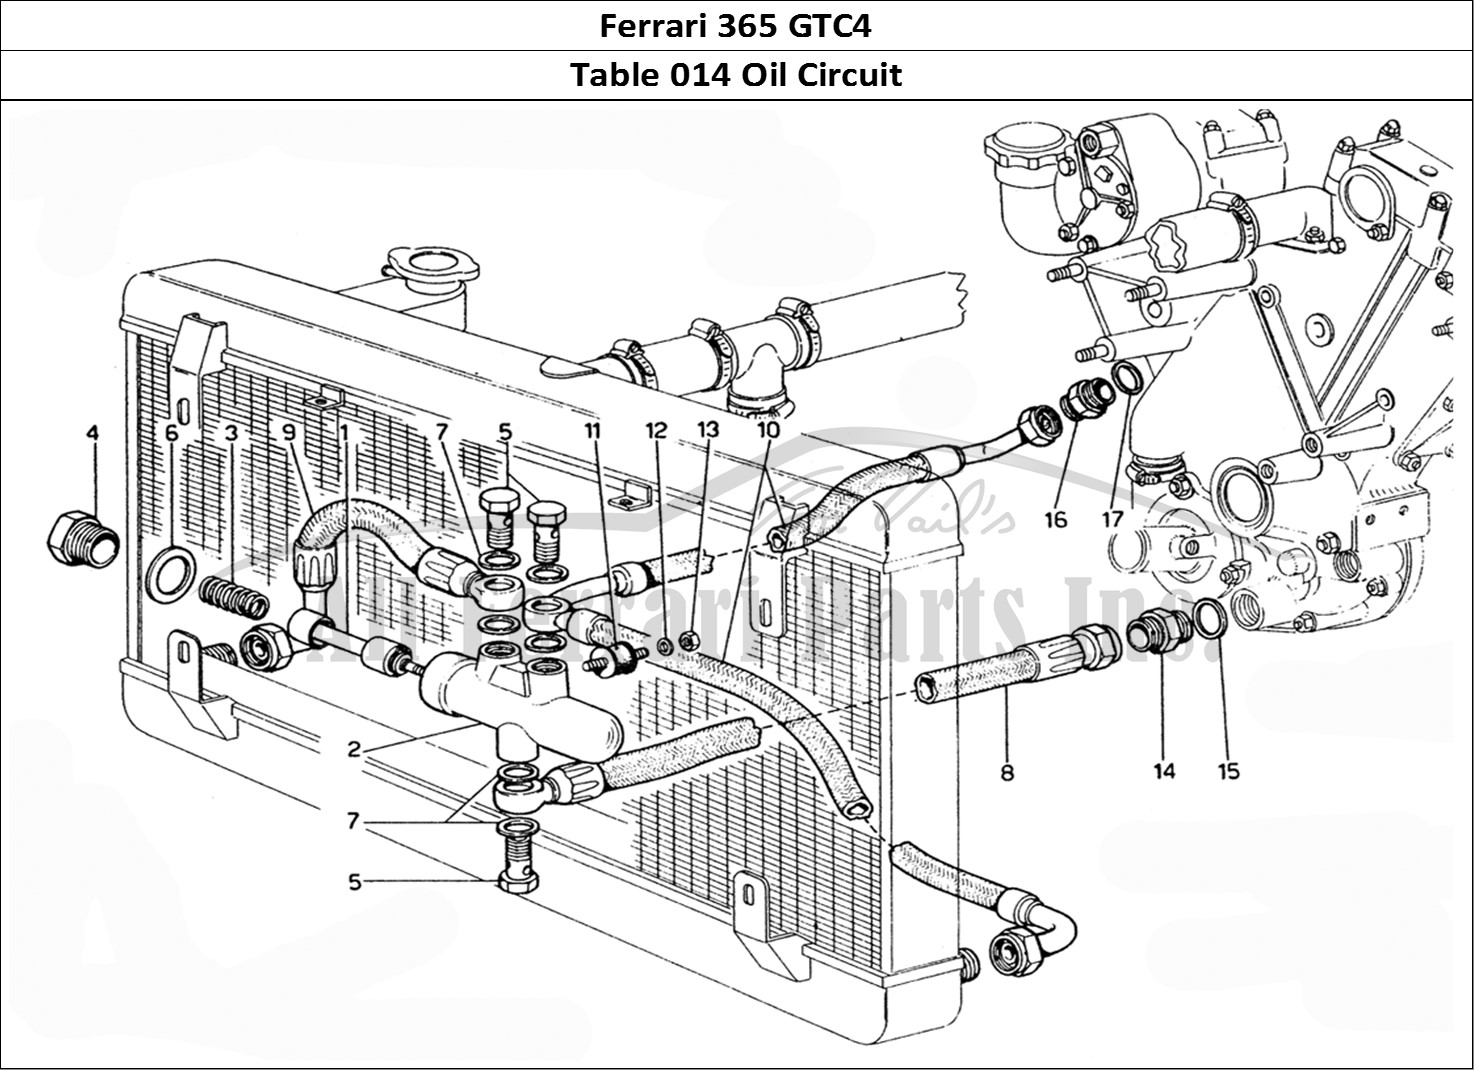 Ferrari Parts Ferrari 365 GTC4 (Mechanical) Page 014 Oil Circuit